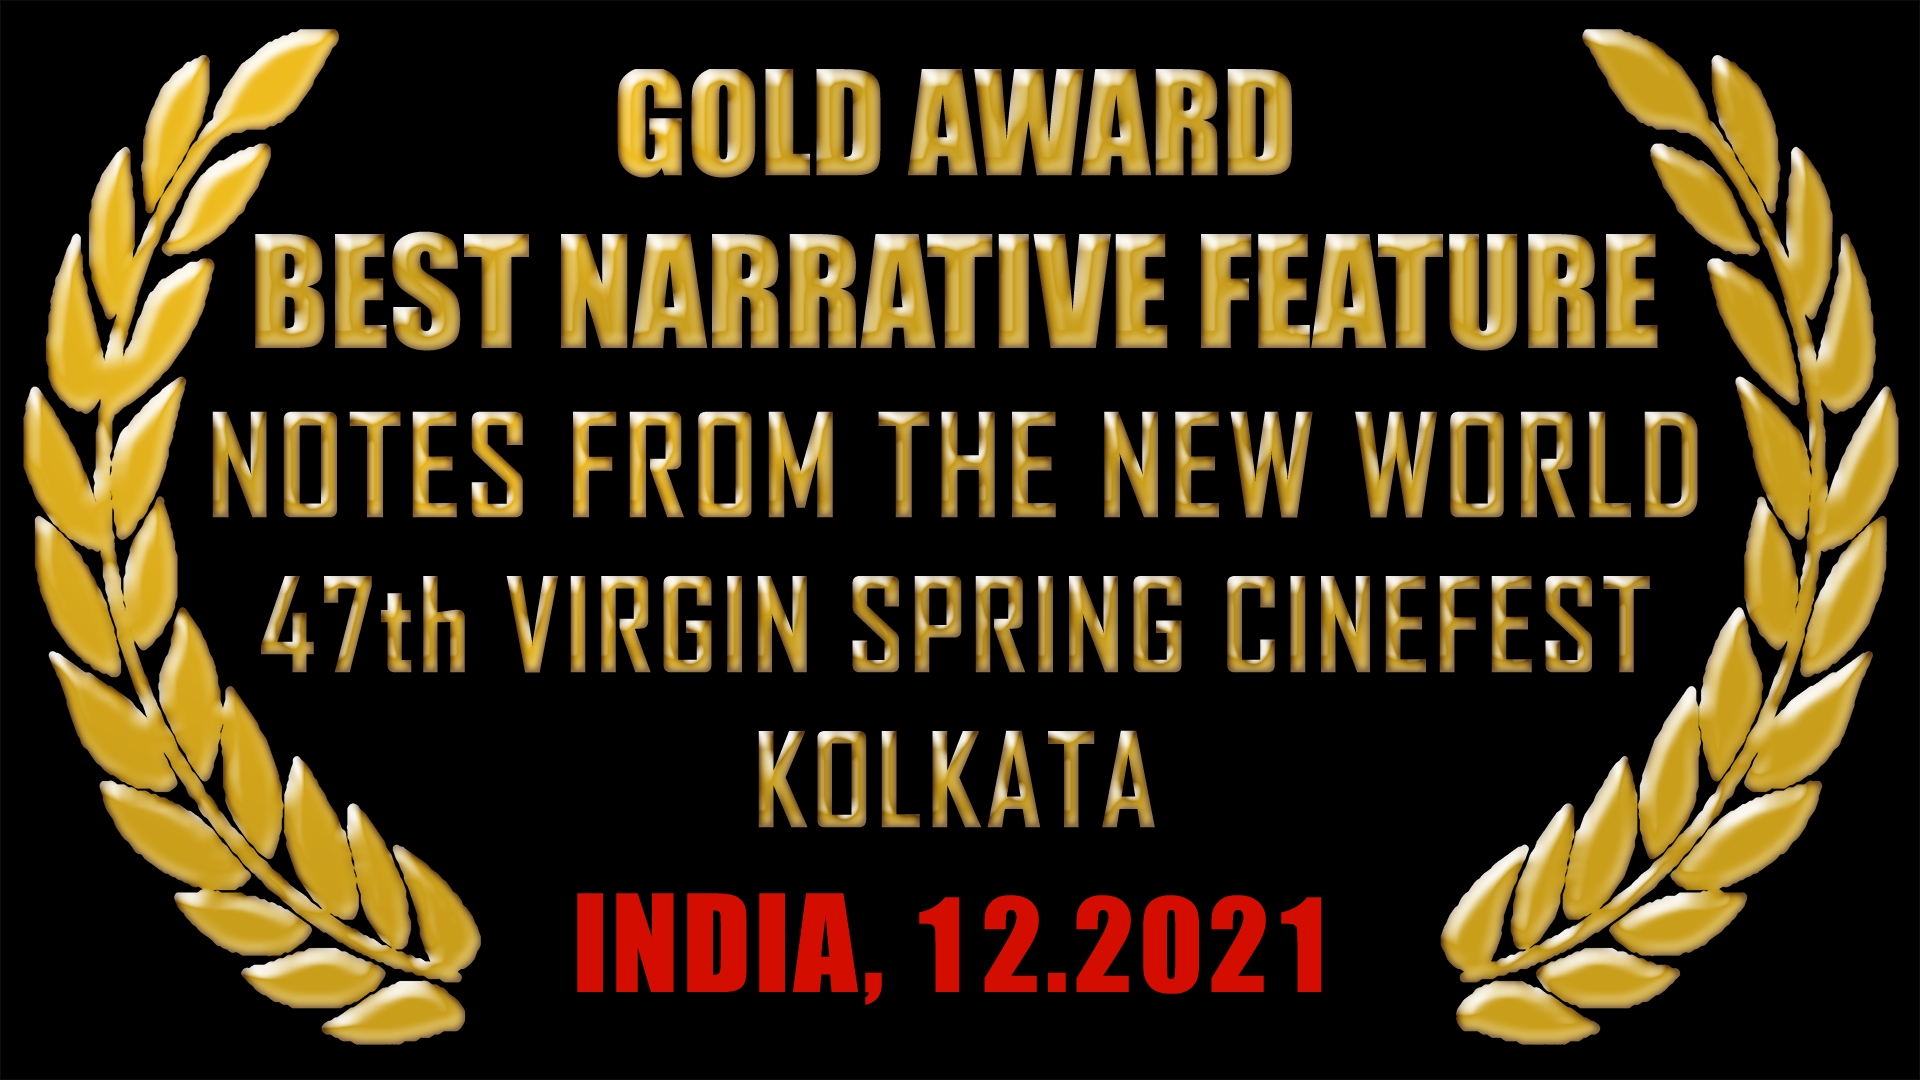 Gold Award Best Narrative Feature, India 2021